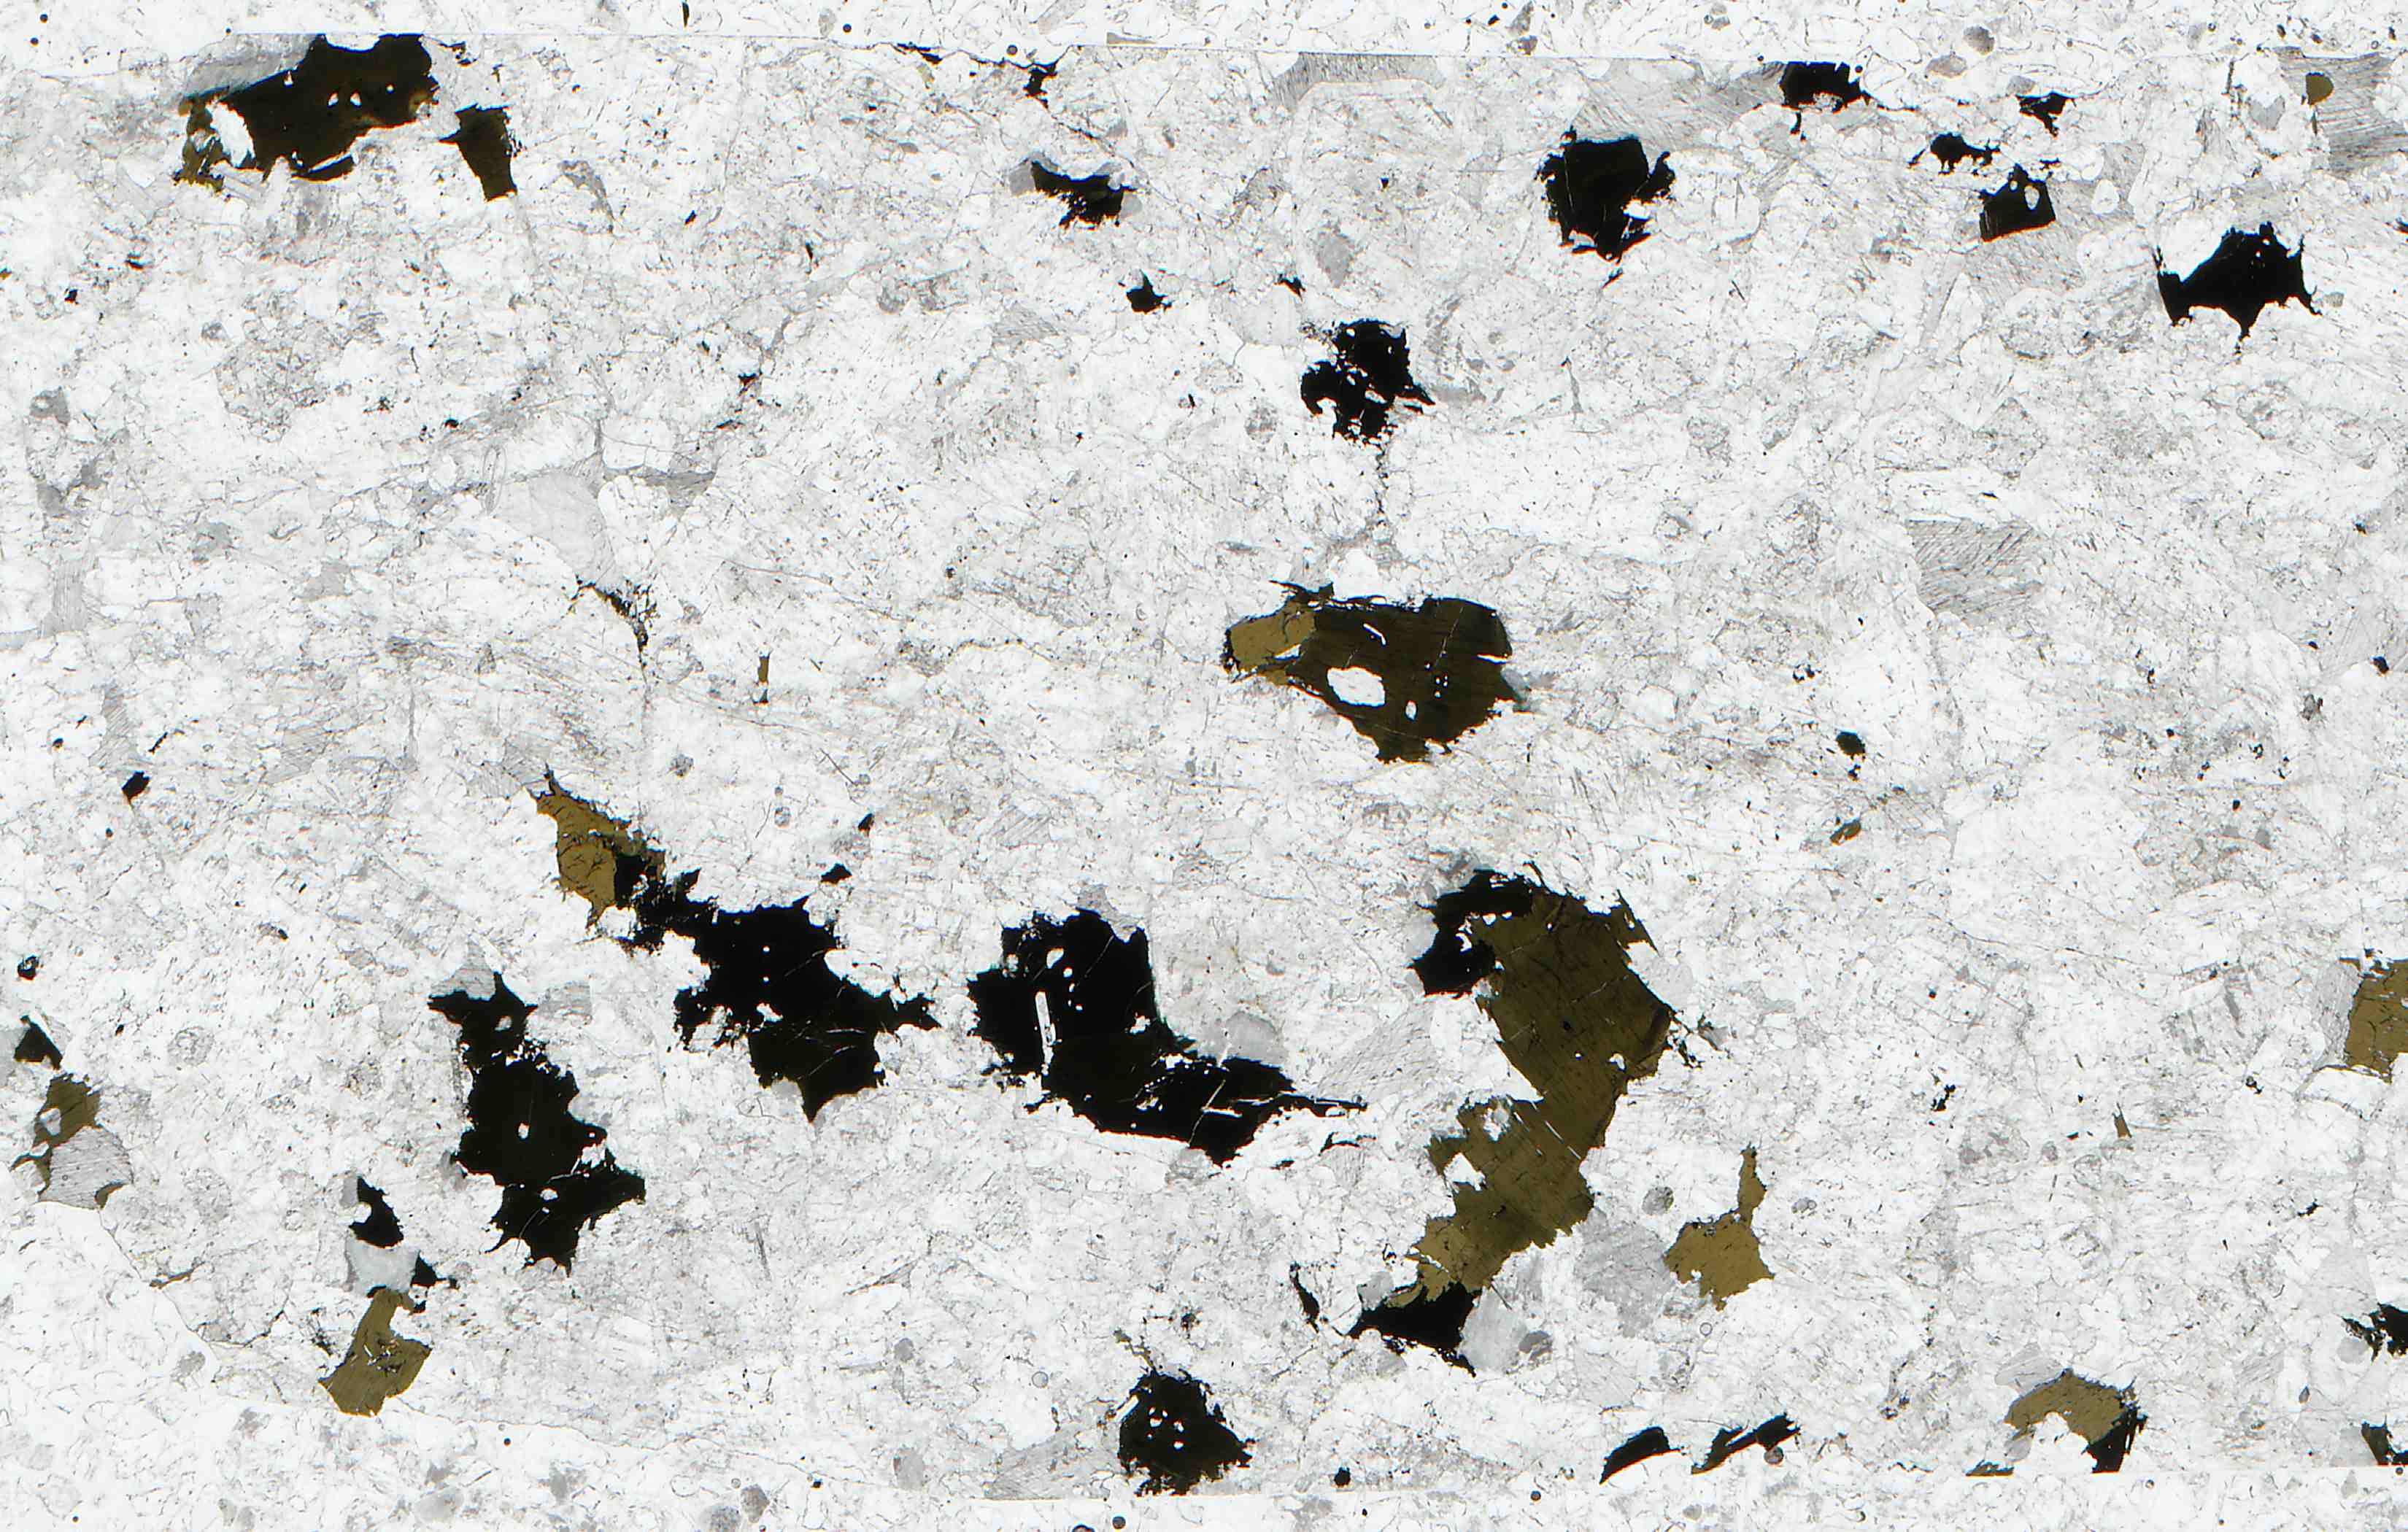 Tien Shan Mountains Tajikistan cancrinite nepheline syenite in thin section